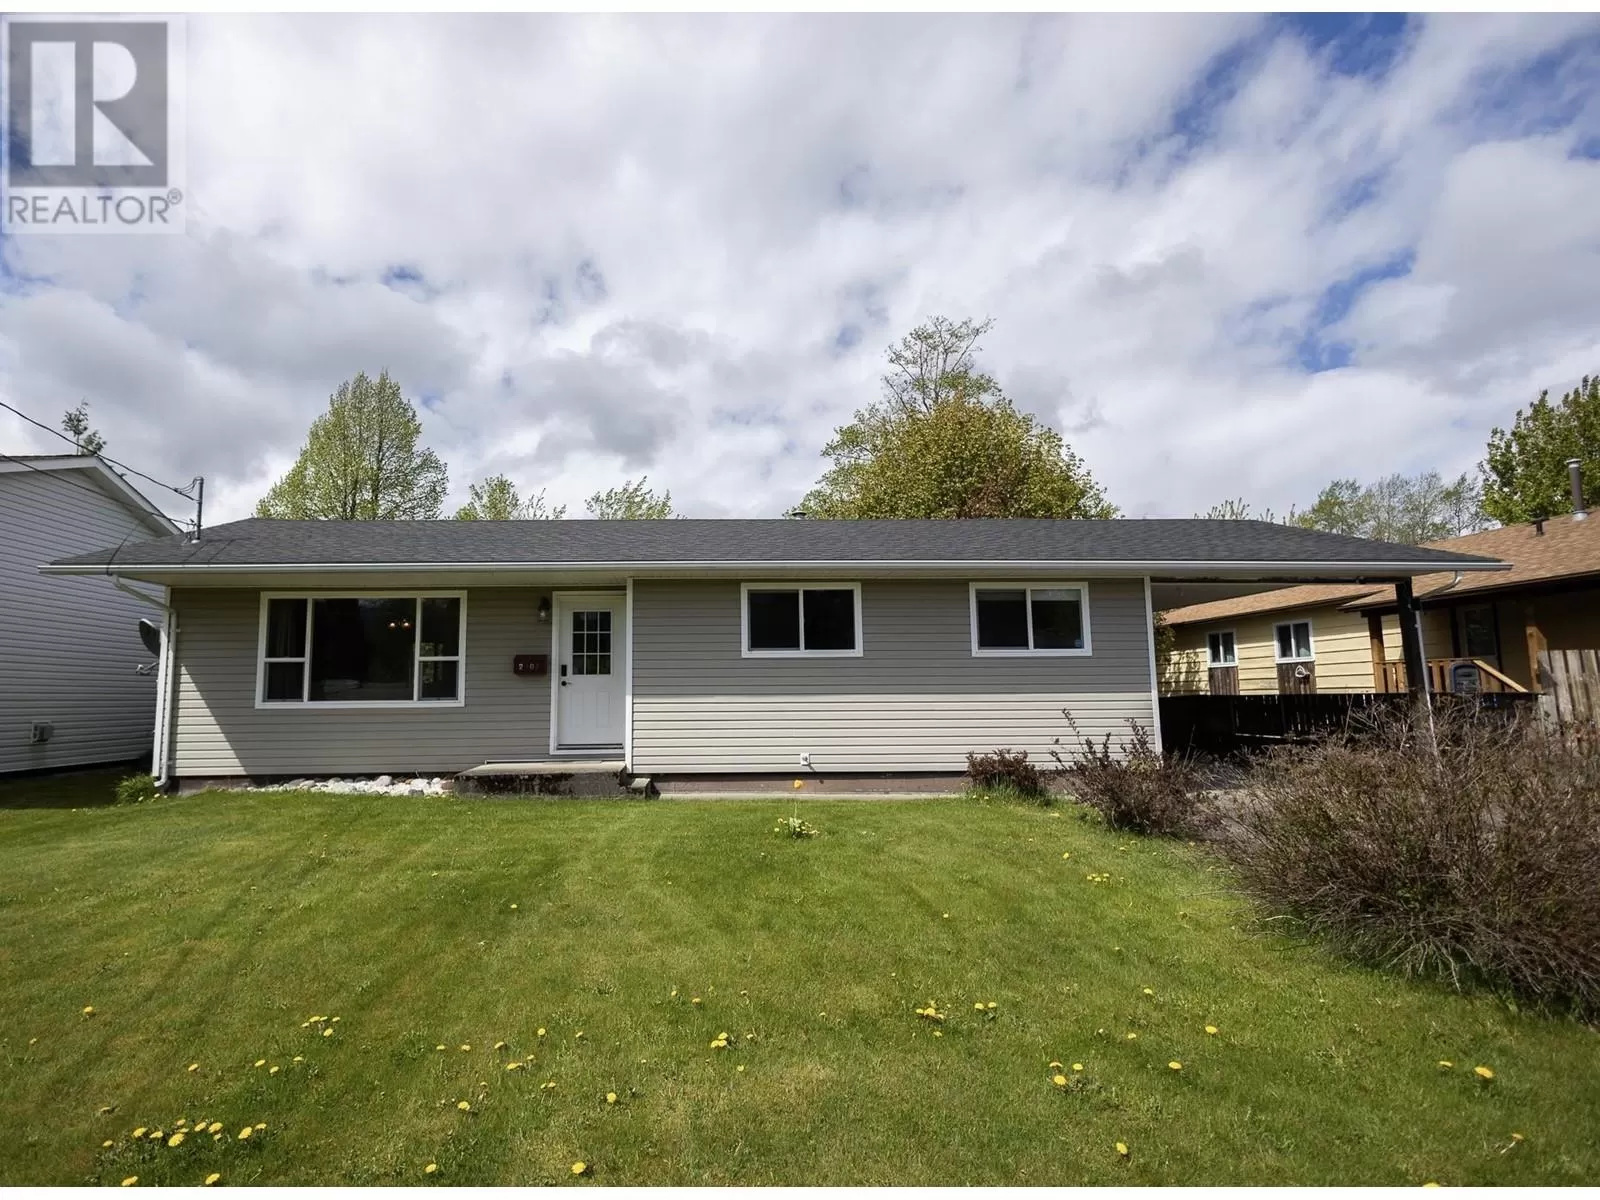 House for rent: 2307 Evergreen Street, Terrace, British Columbia V8G 4S6